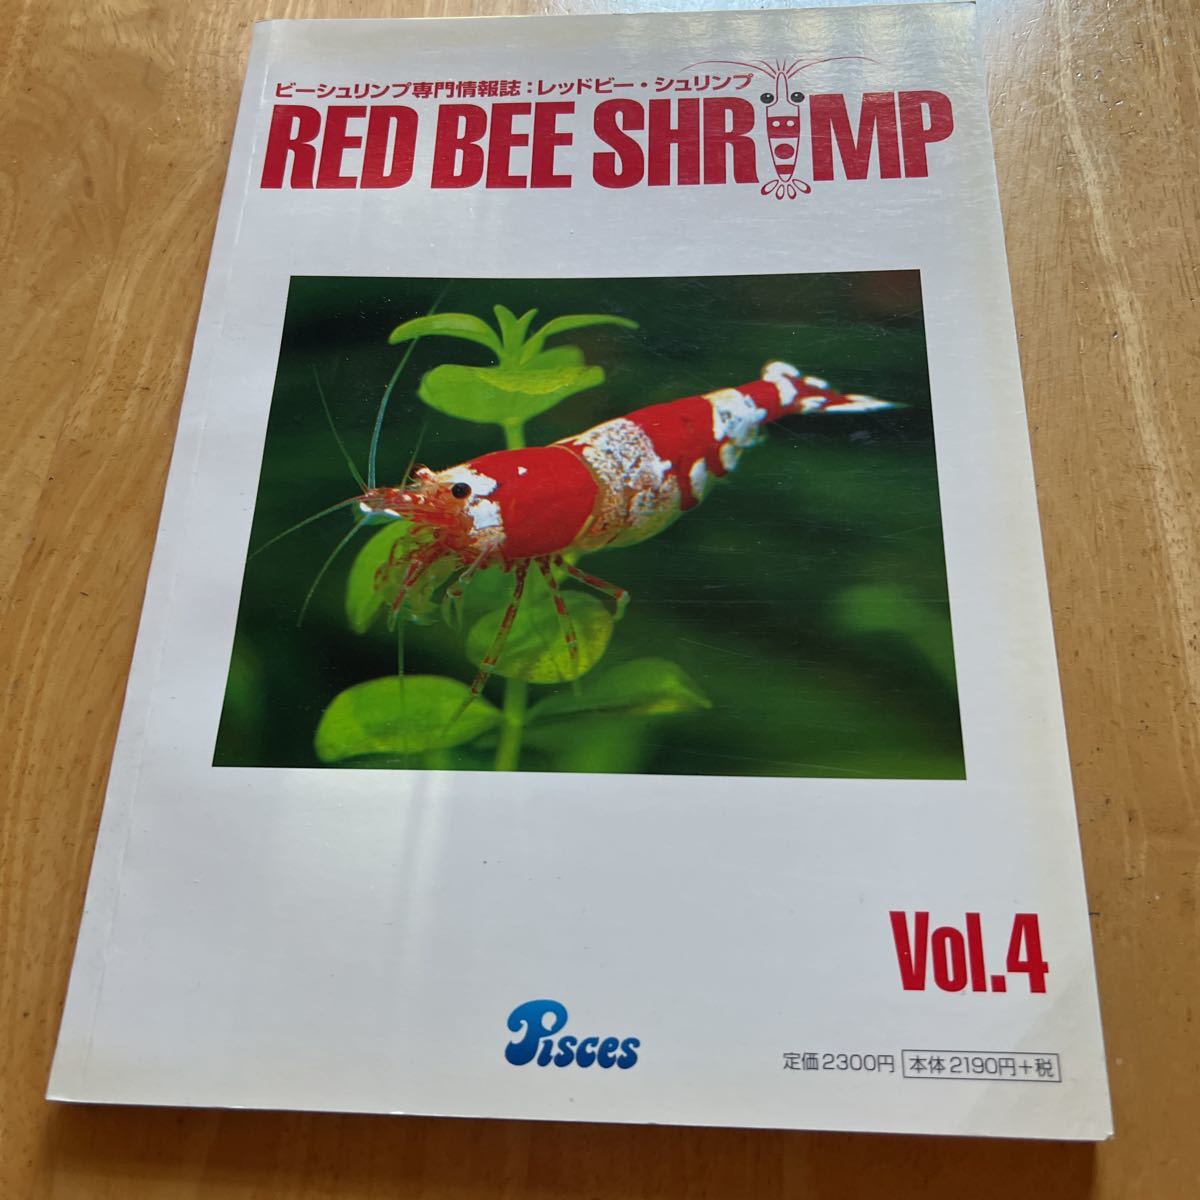  Red Bee Shrimp Vol.4